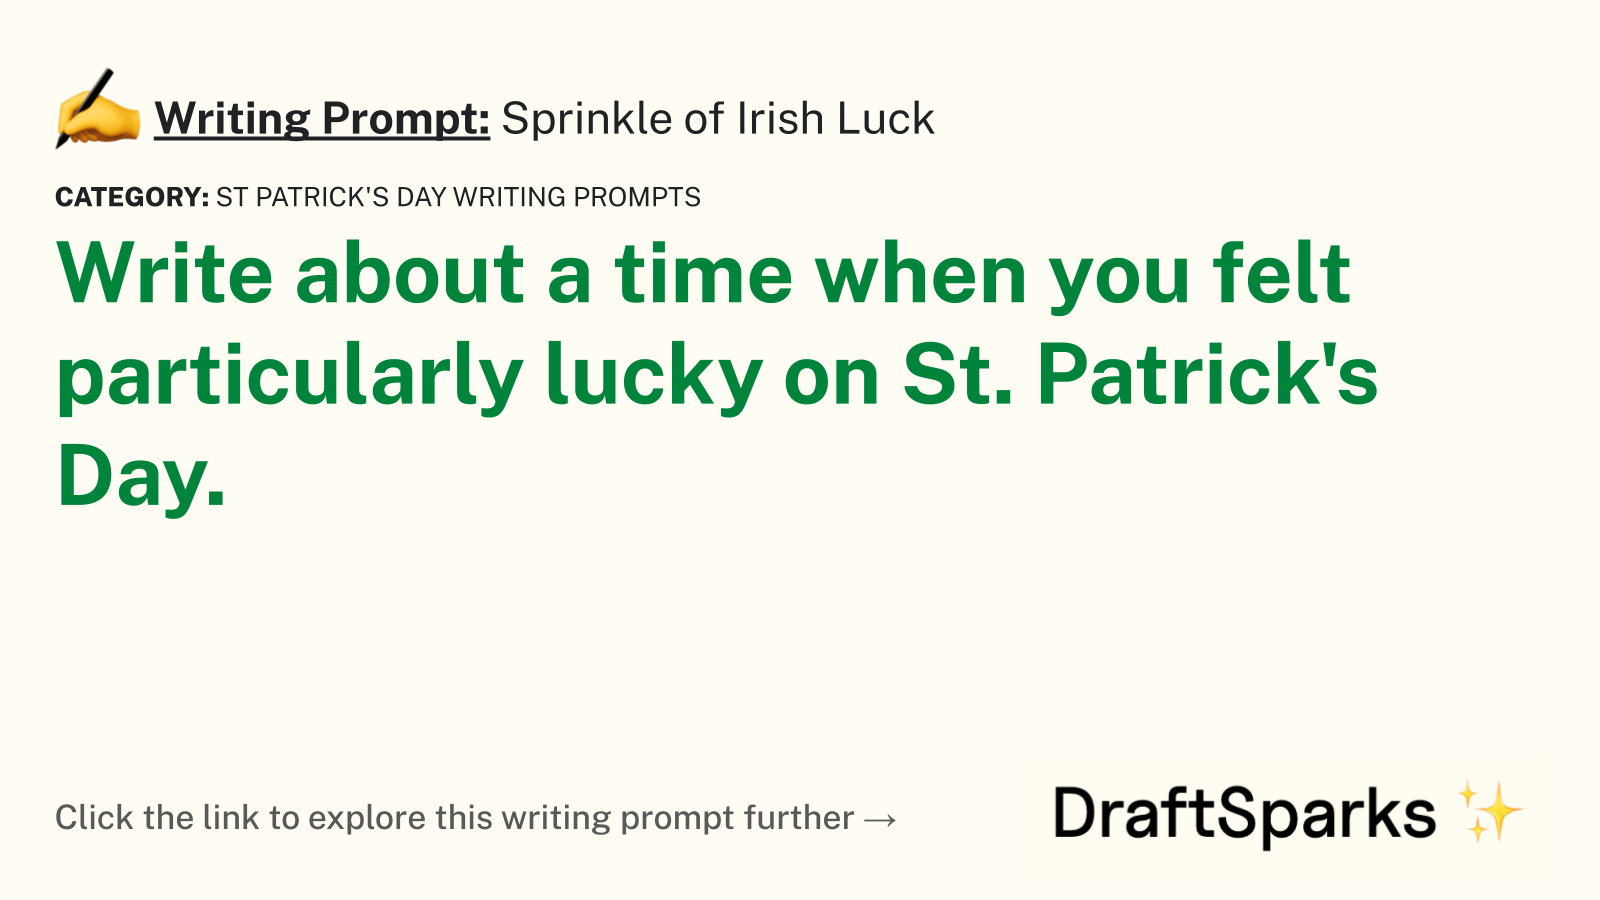 Sprinkle of Irish Luck